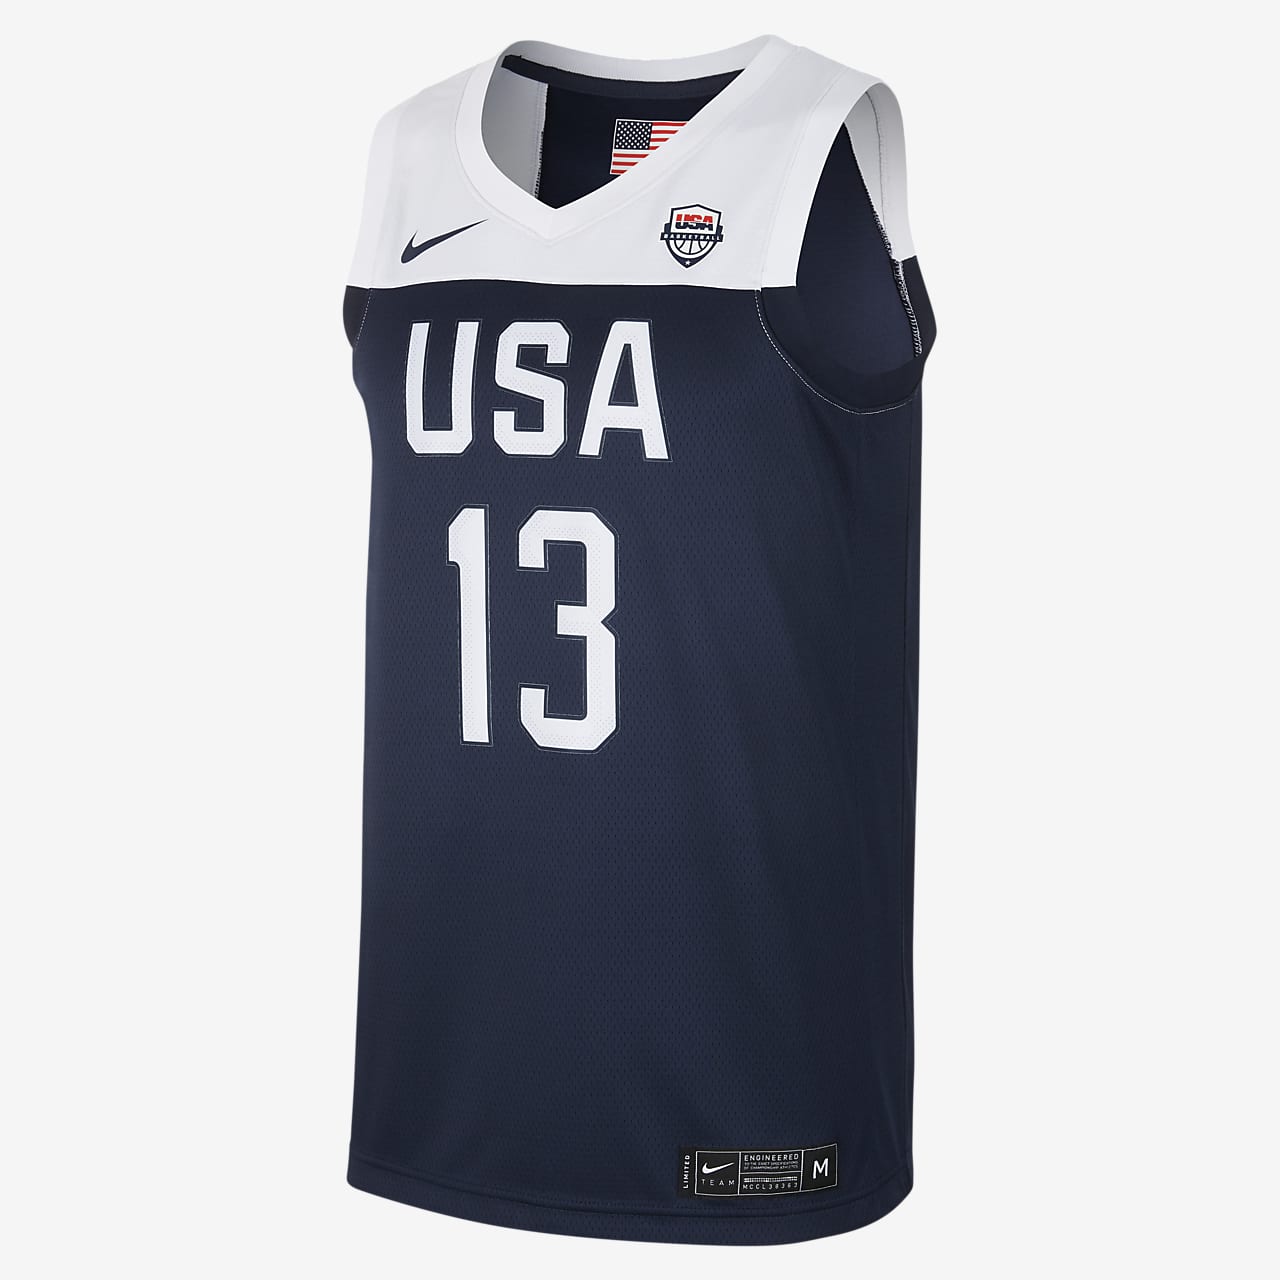 Maillot de basketball USA Nike (Road) pour Homme